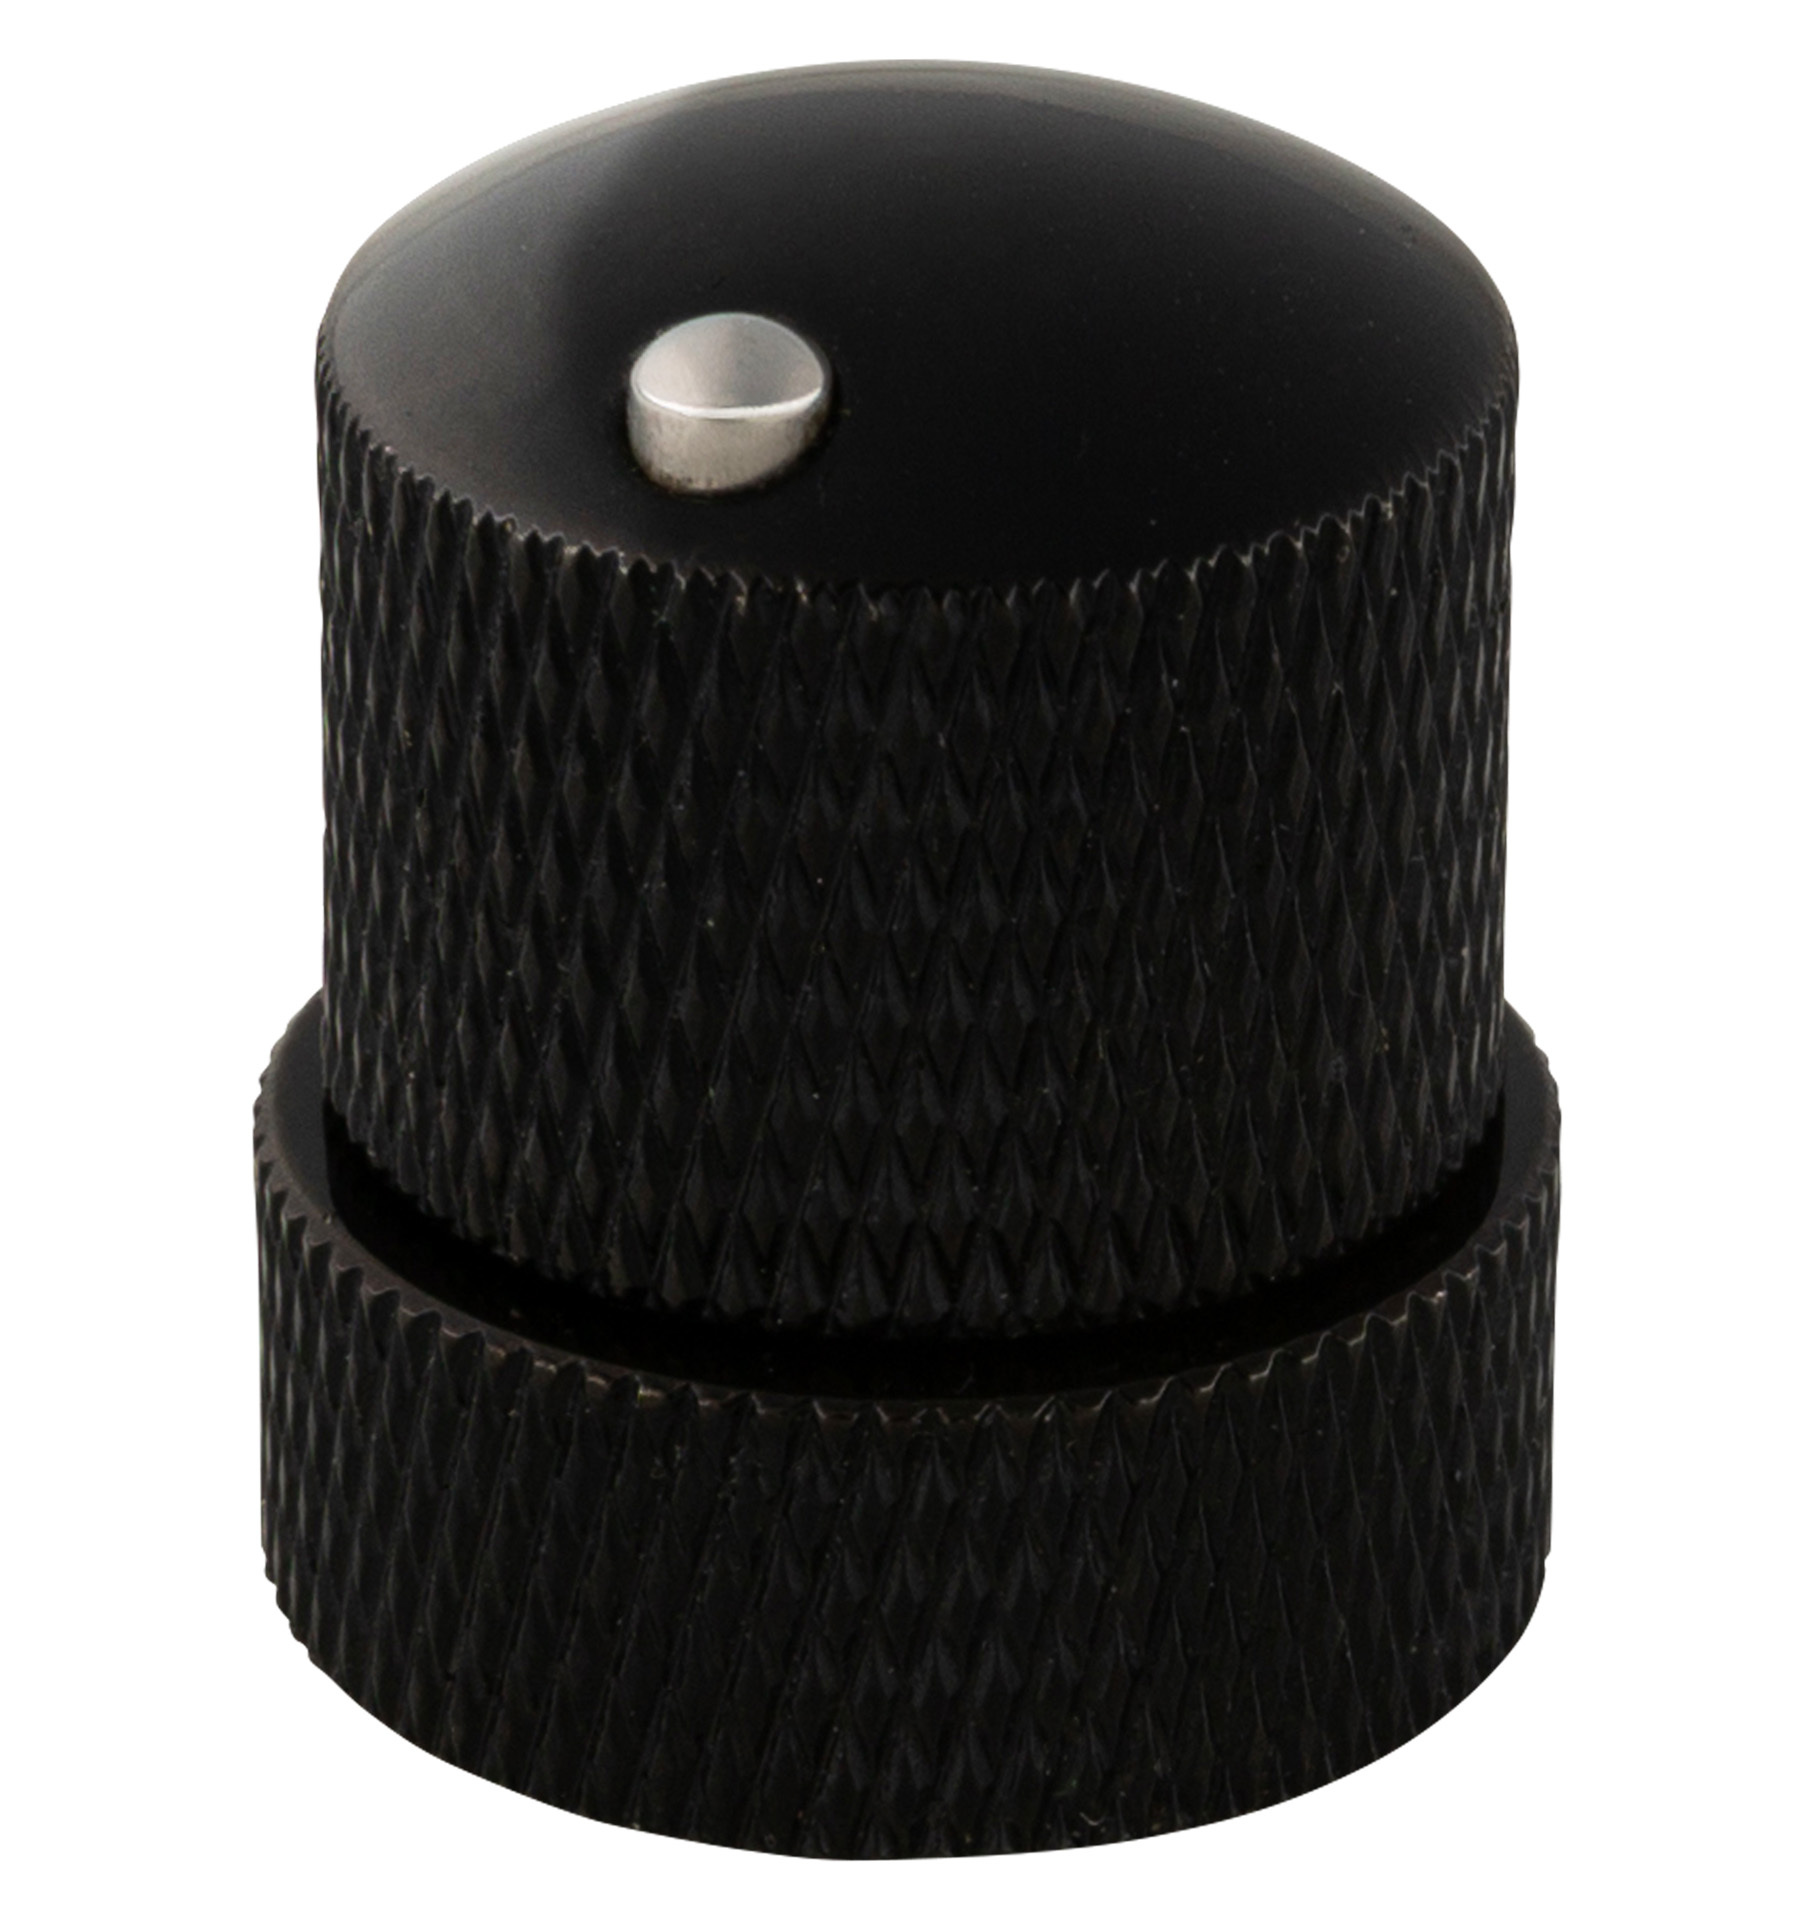 Framus & Warwick Parts - Stacked Potentiometer Dome Knob with Convex Indicator - Black